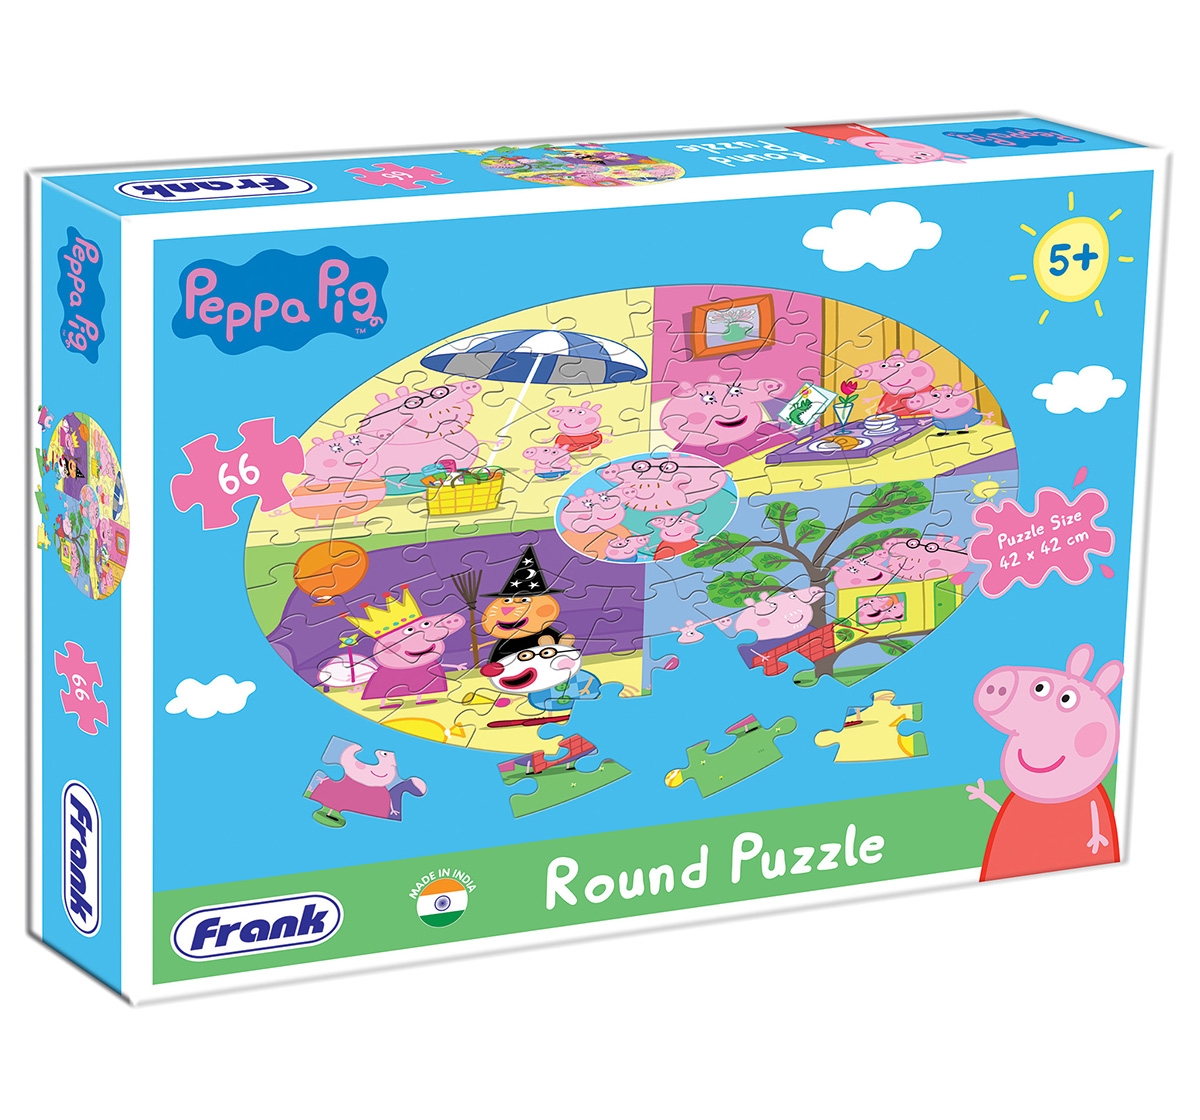 Peppa Pig | Peppa Pig Round Puzzle 66 pcs, 5Y+ 0